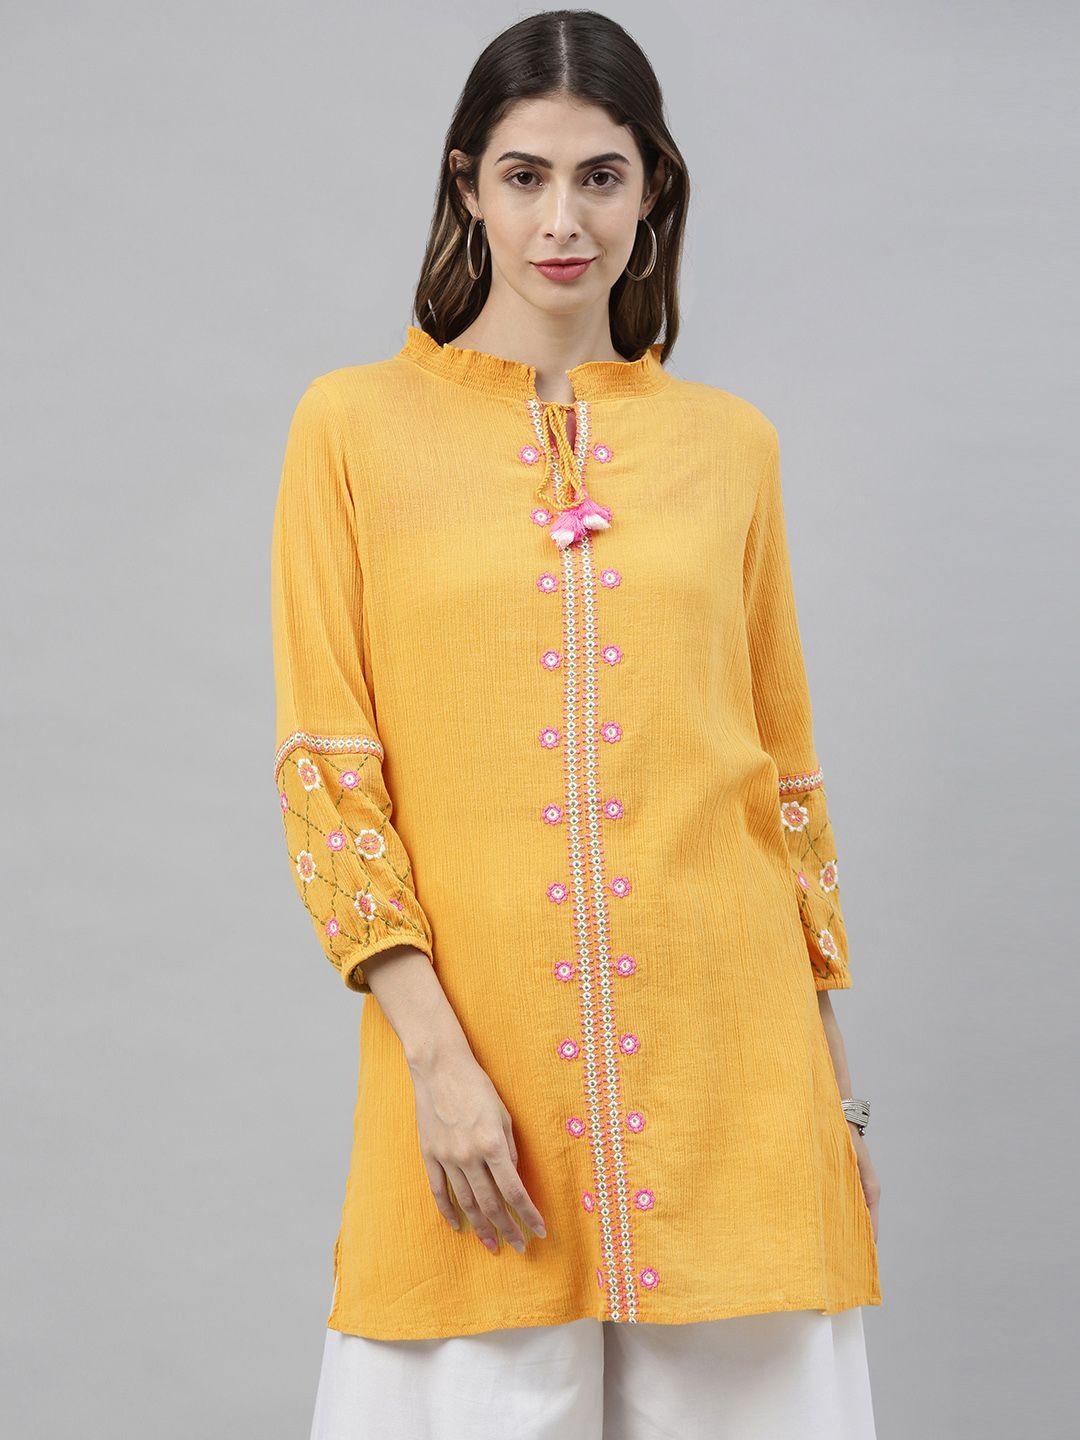 global-desi-women's-mustard-&-white-solid-tunic